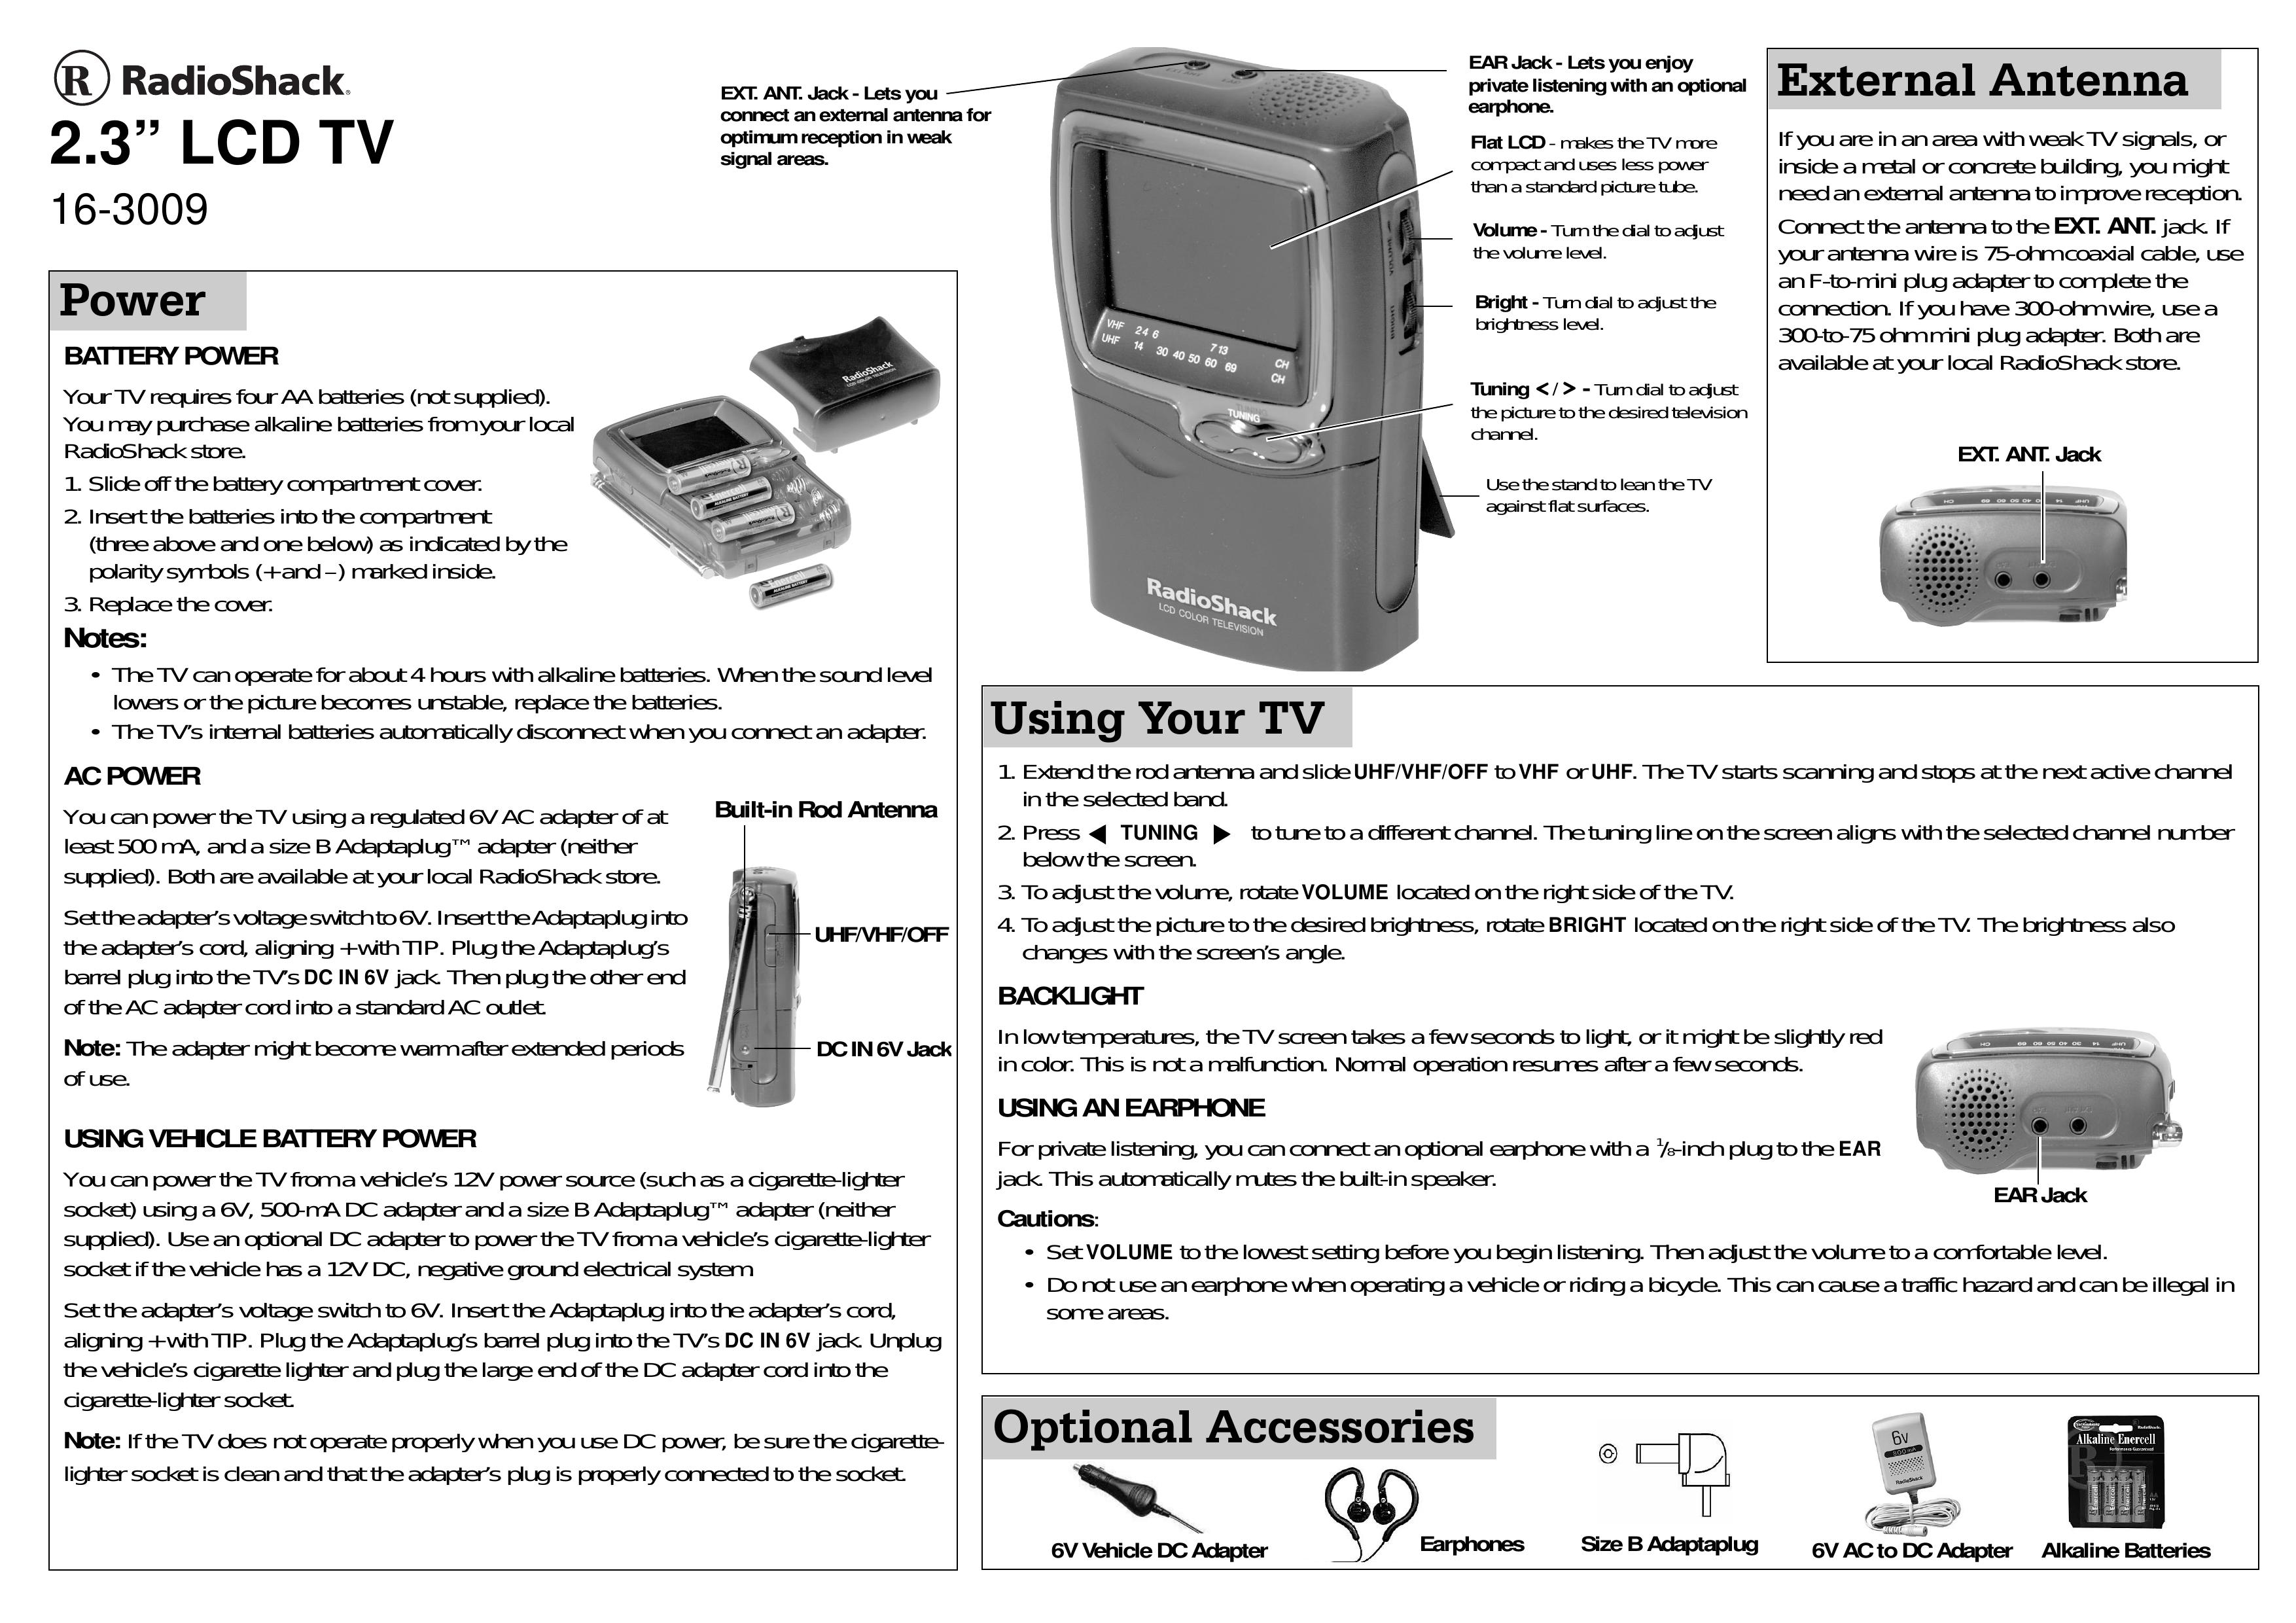 Radio Shack 16-3009 Handheld TV User Manual